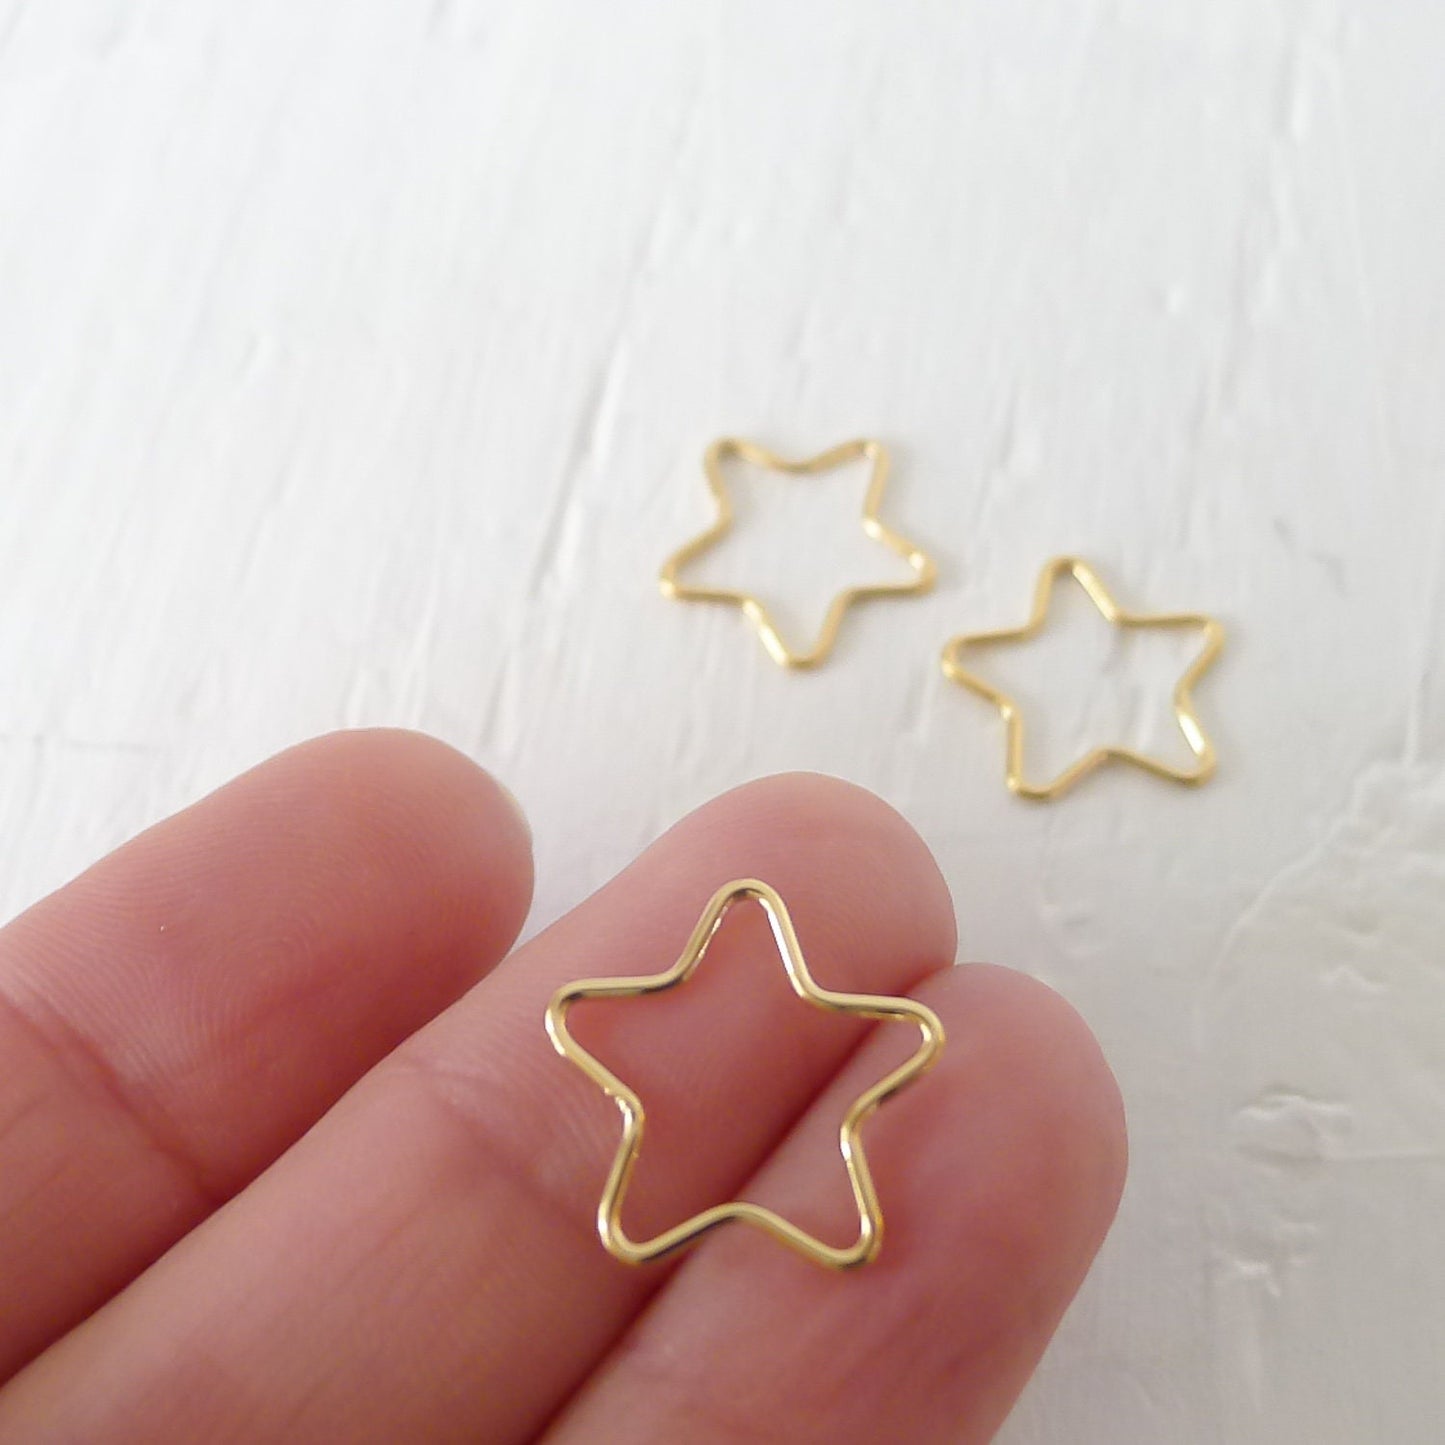 Gold Star Wire Link Festoon Charm Guiding Light Celestial Jewelry Maker